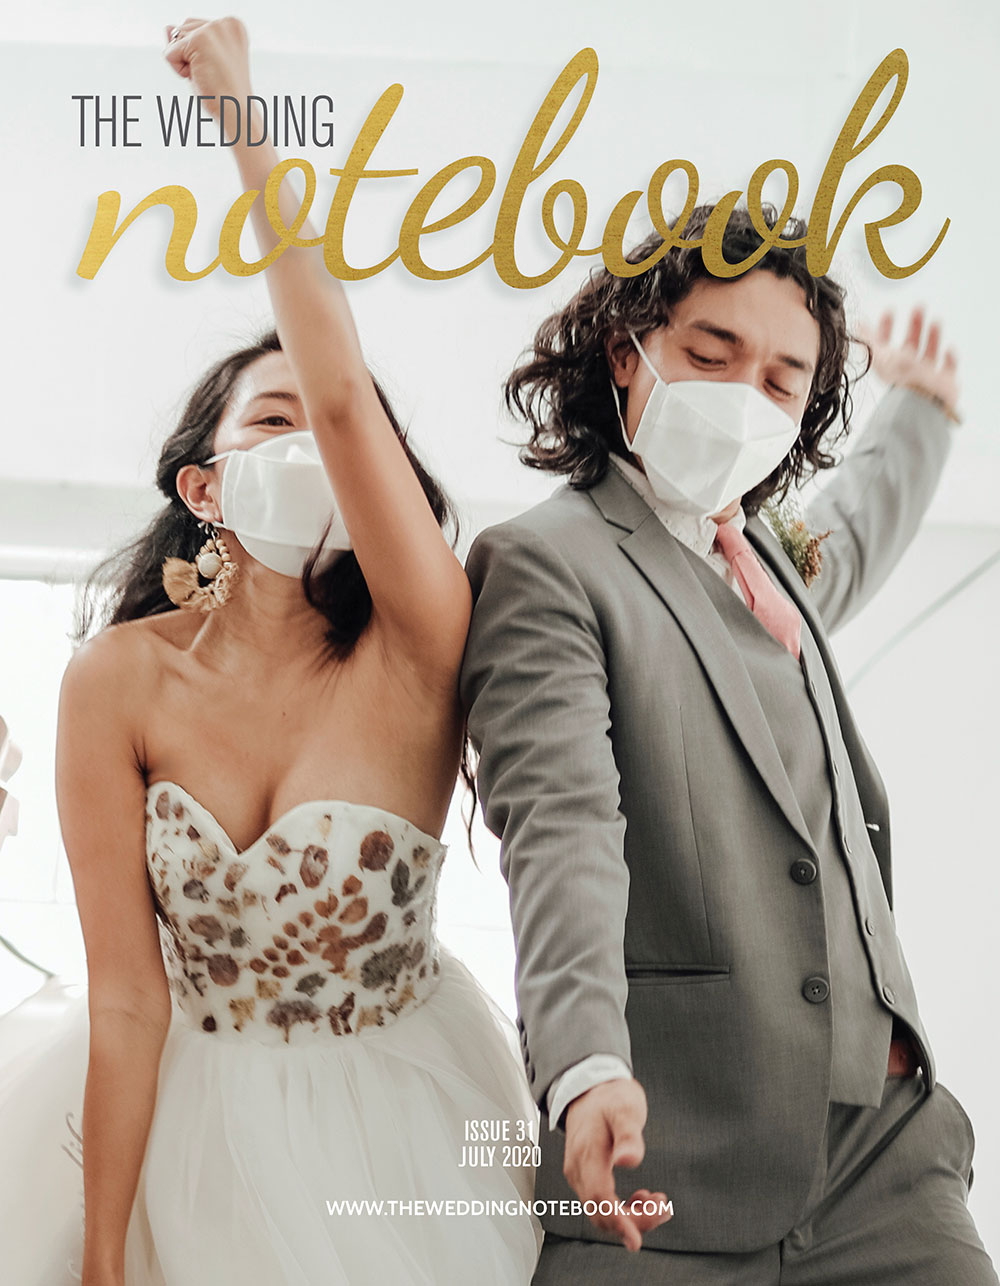 The Wedding Notebook Covid-19 issue. www.theweddingnotebook.com